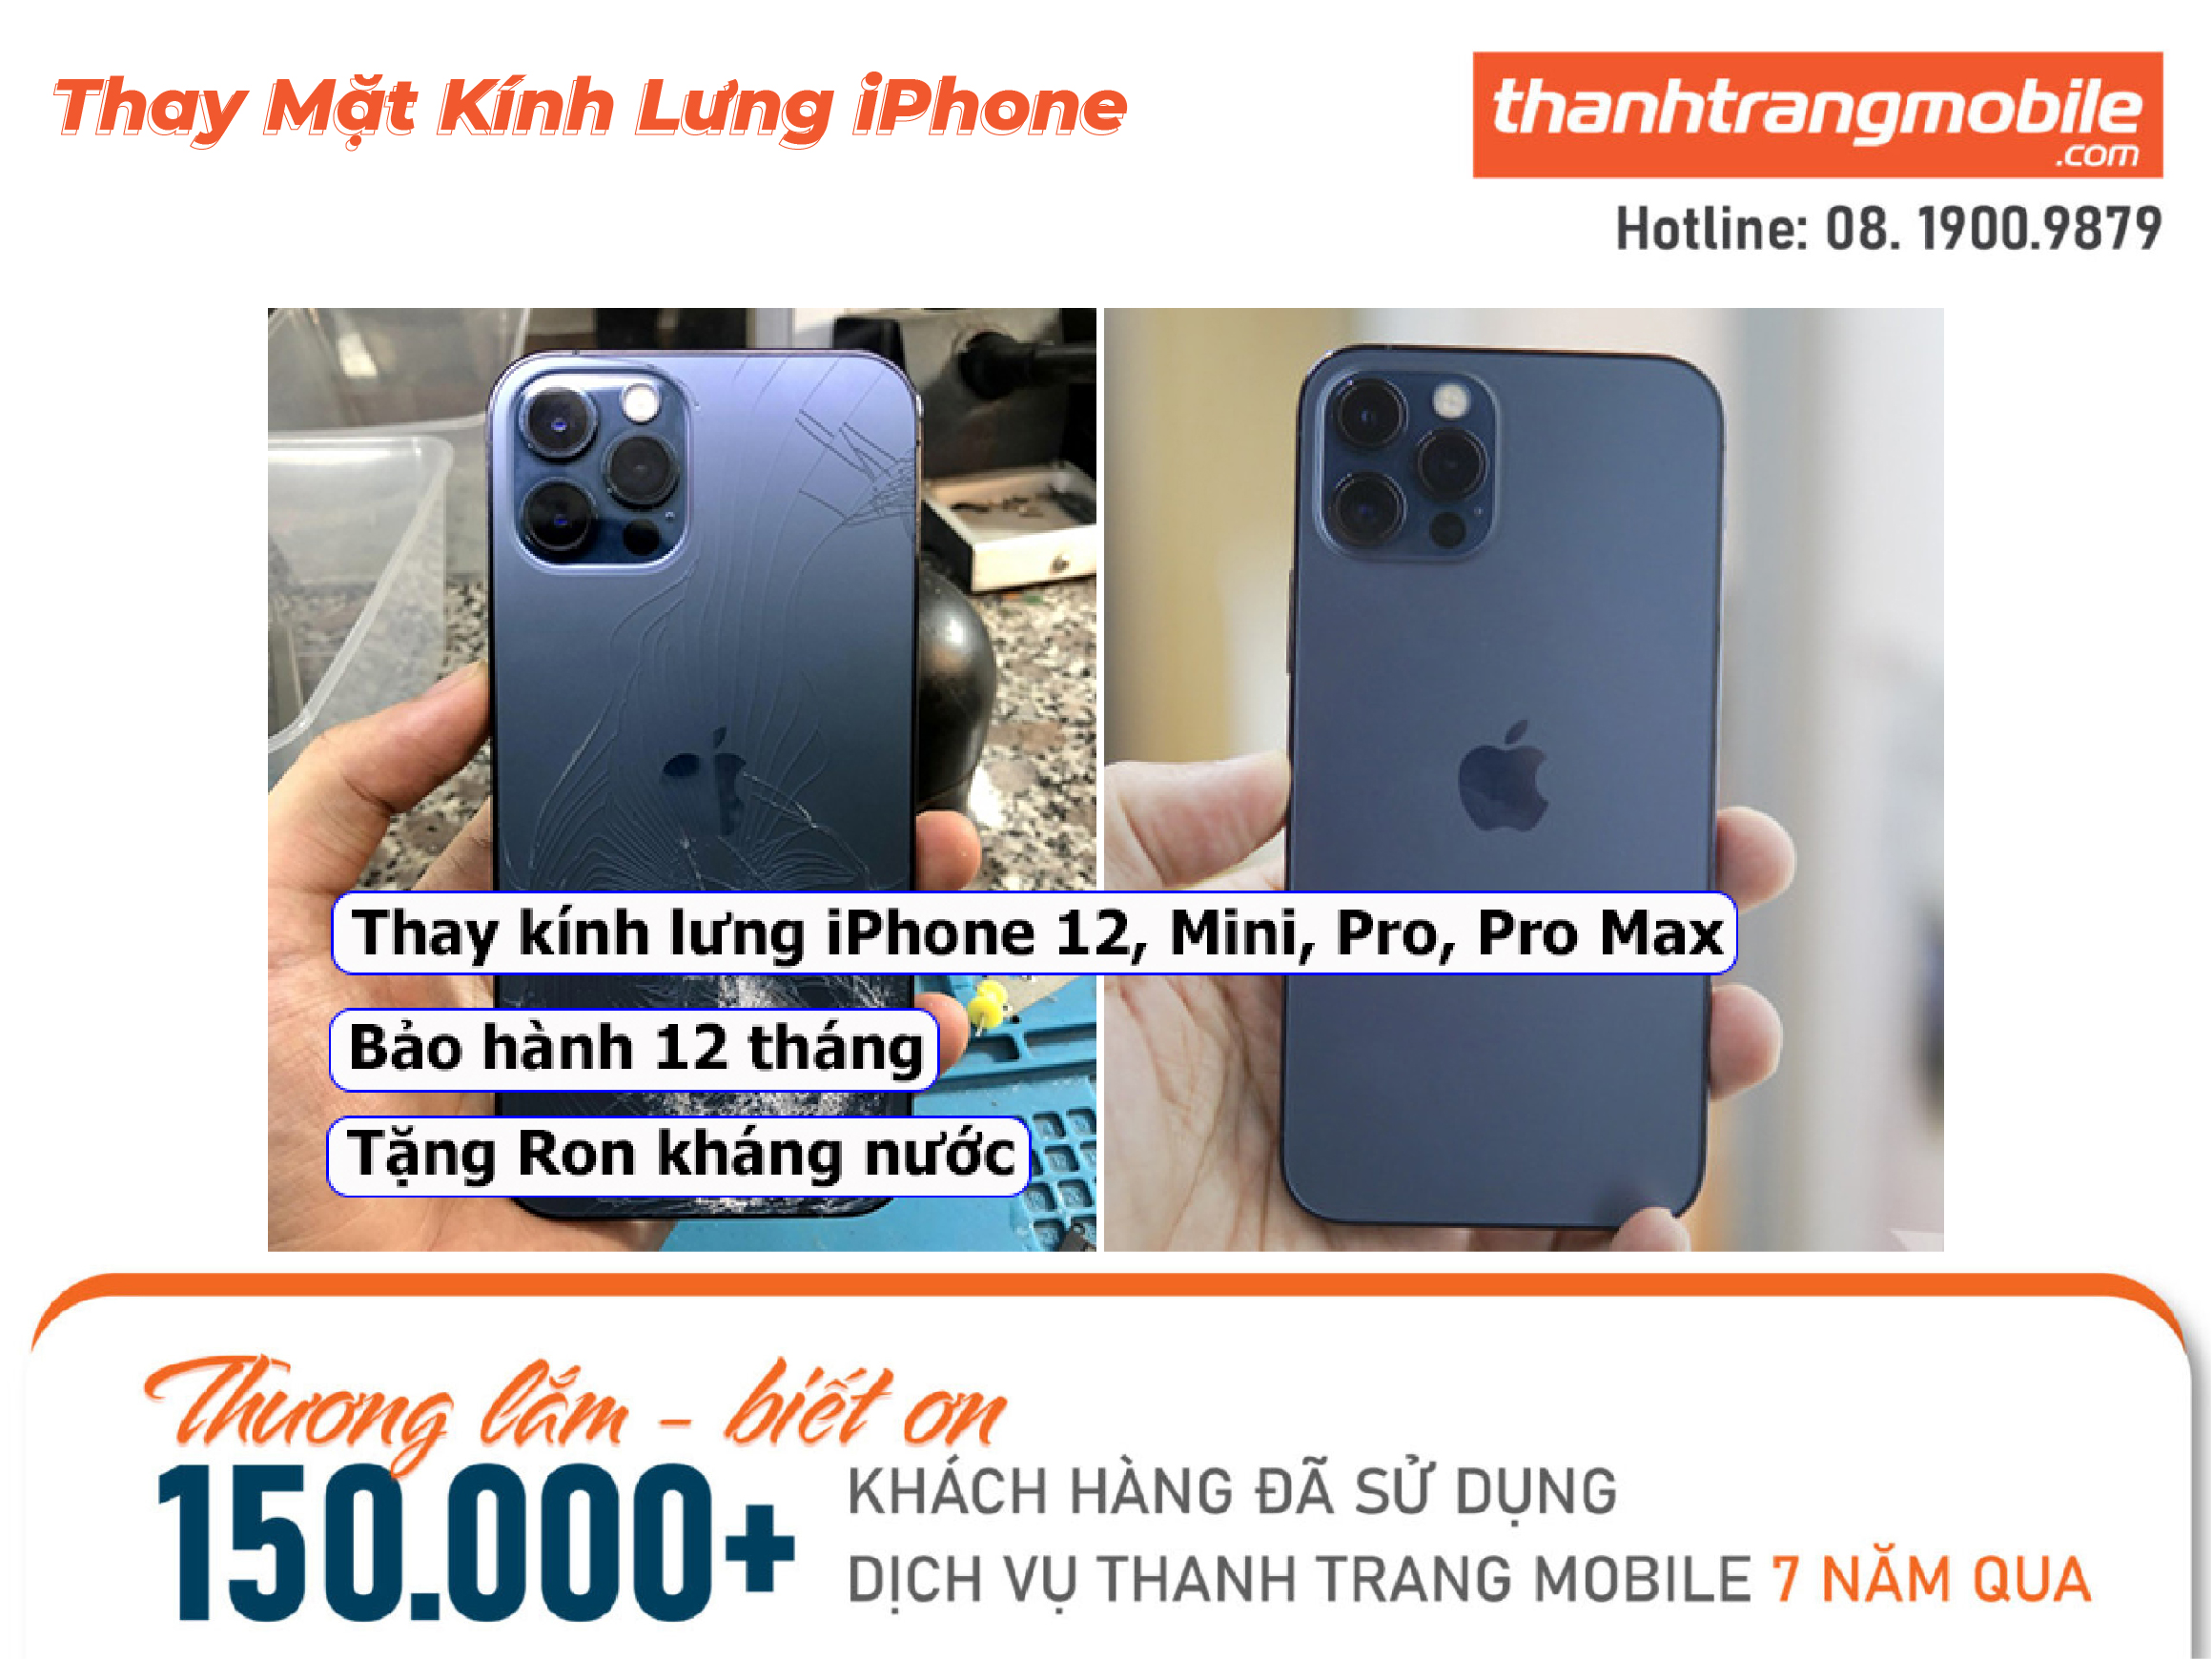 thay-mat-kinh-lung-iphone-thanhtrangmobile_2@4x-100-2 Thay Kính Lưng iPhone 11 Pro Max